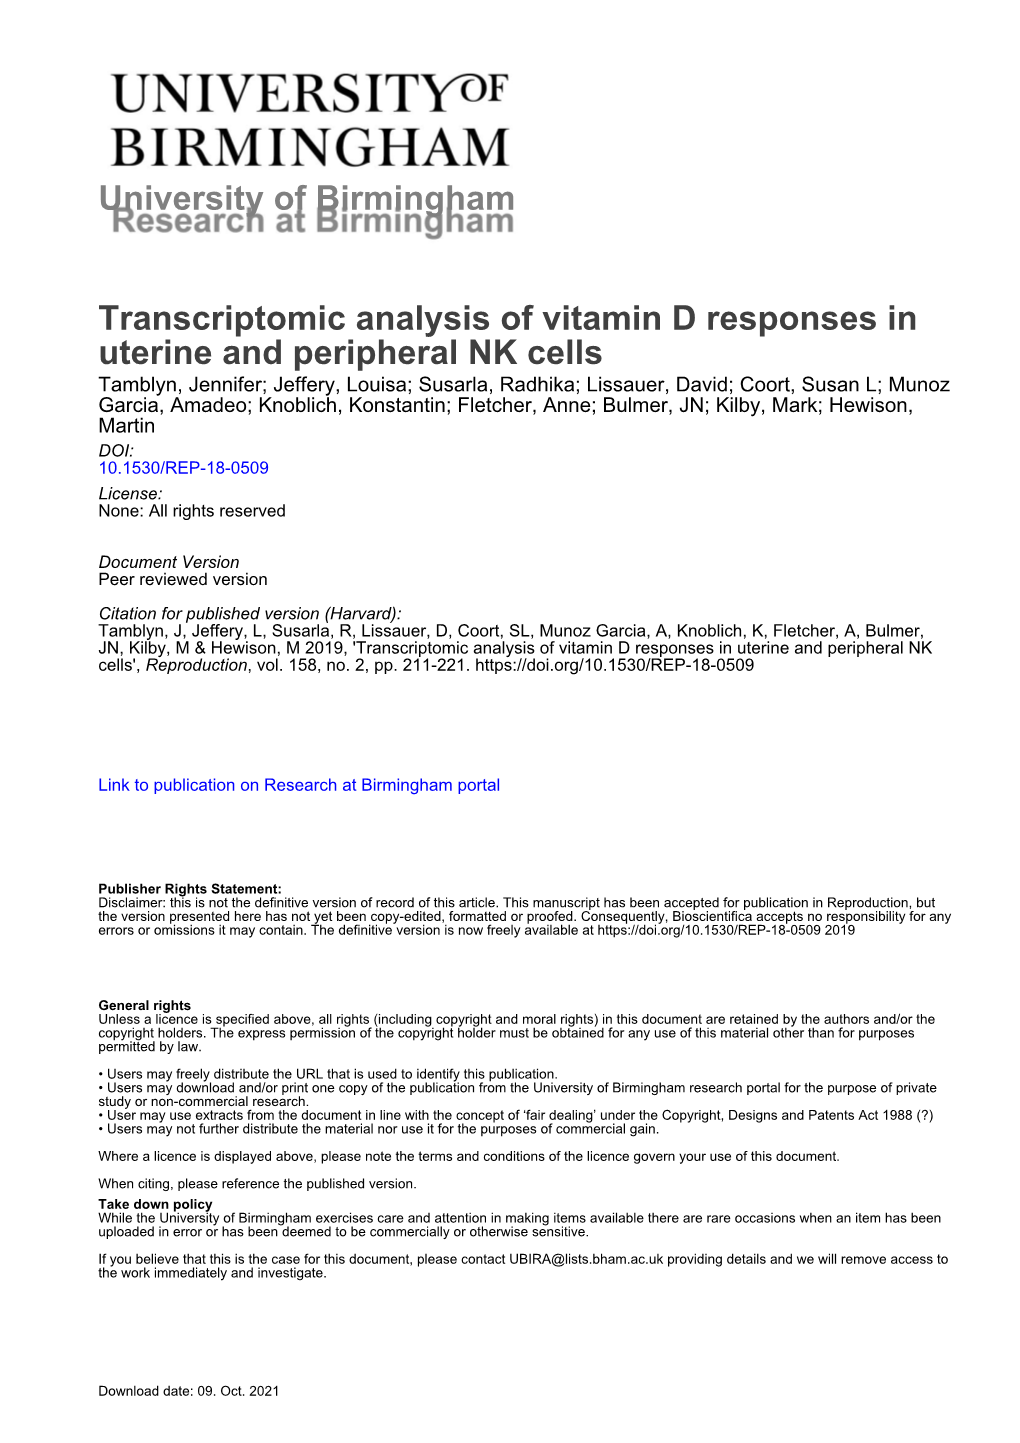 University of Birmingham Transcriptomic Analysis of Vitamin D